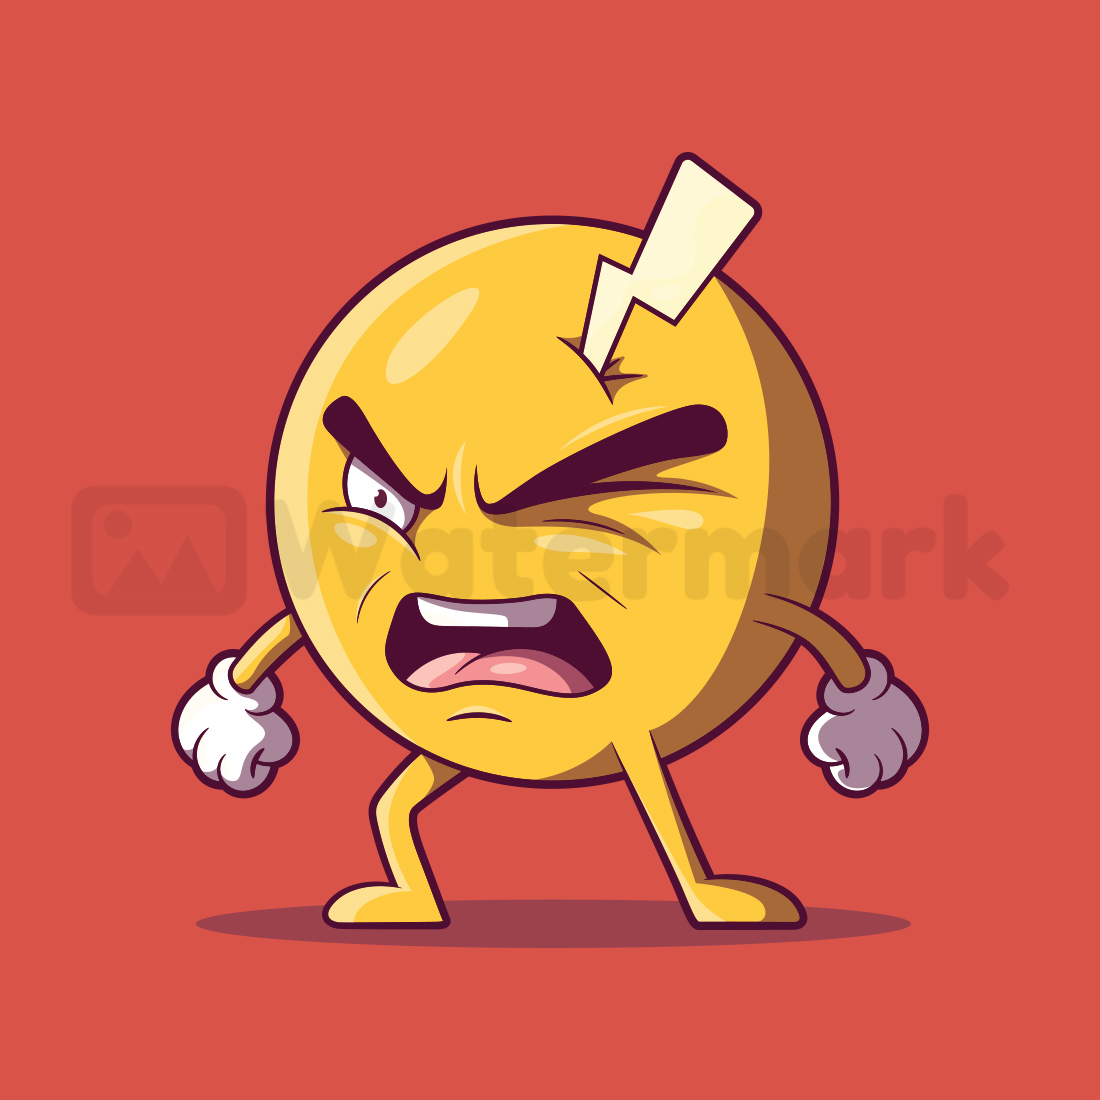 Angry Emoji! preview image.